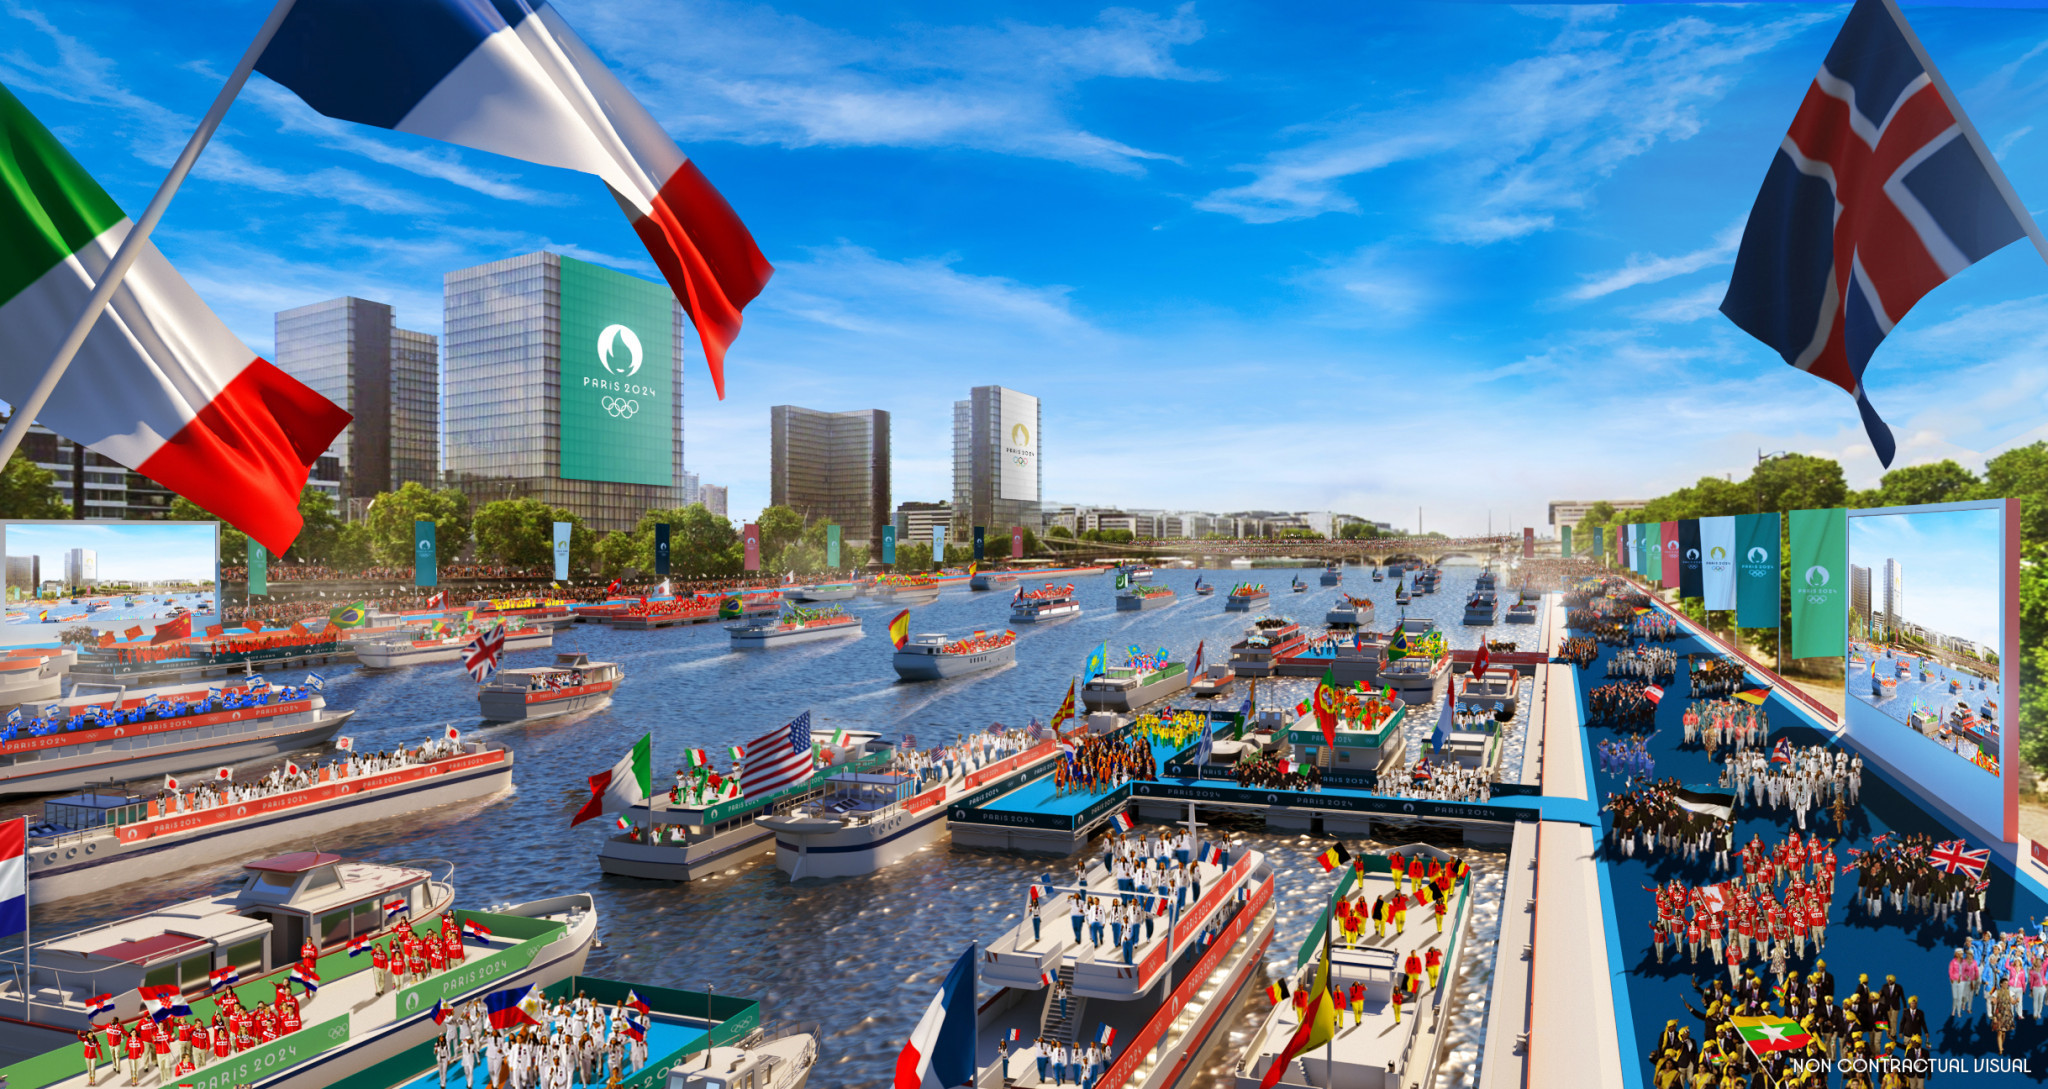 Paris 2024 Olympics opening ceremony to be held on River Seine Kwiknews